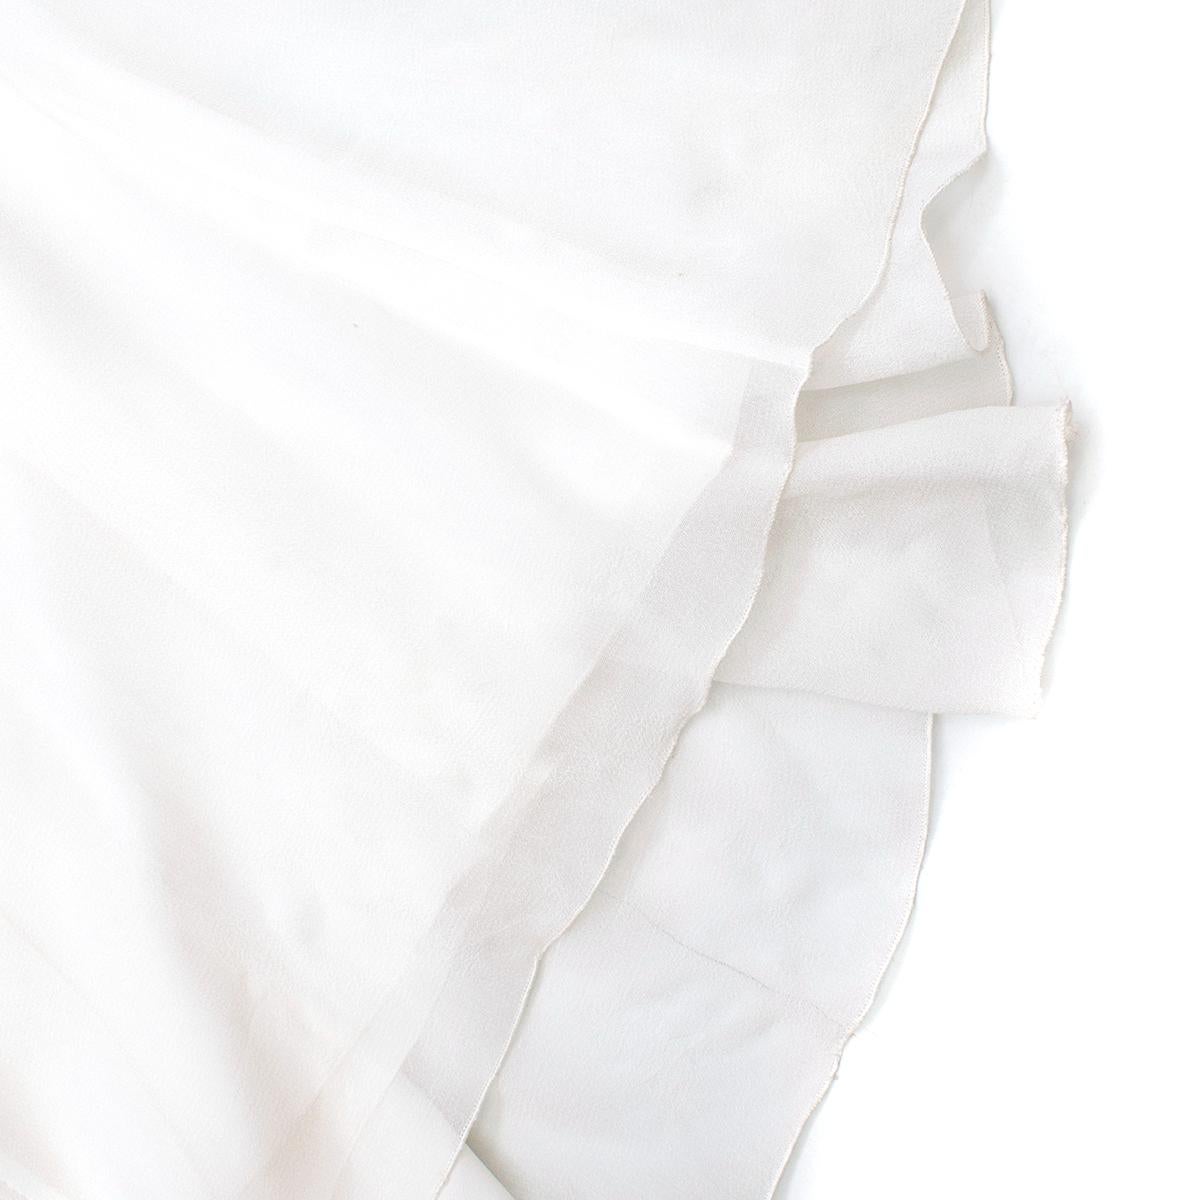 Blugirl White Sequin Embellished Midi Dress estimated size S For Sale 1